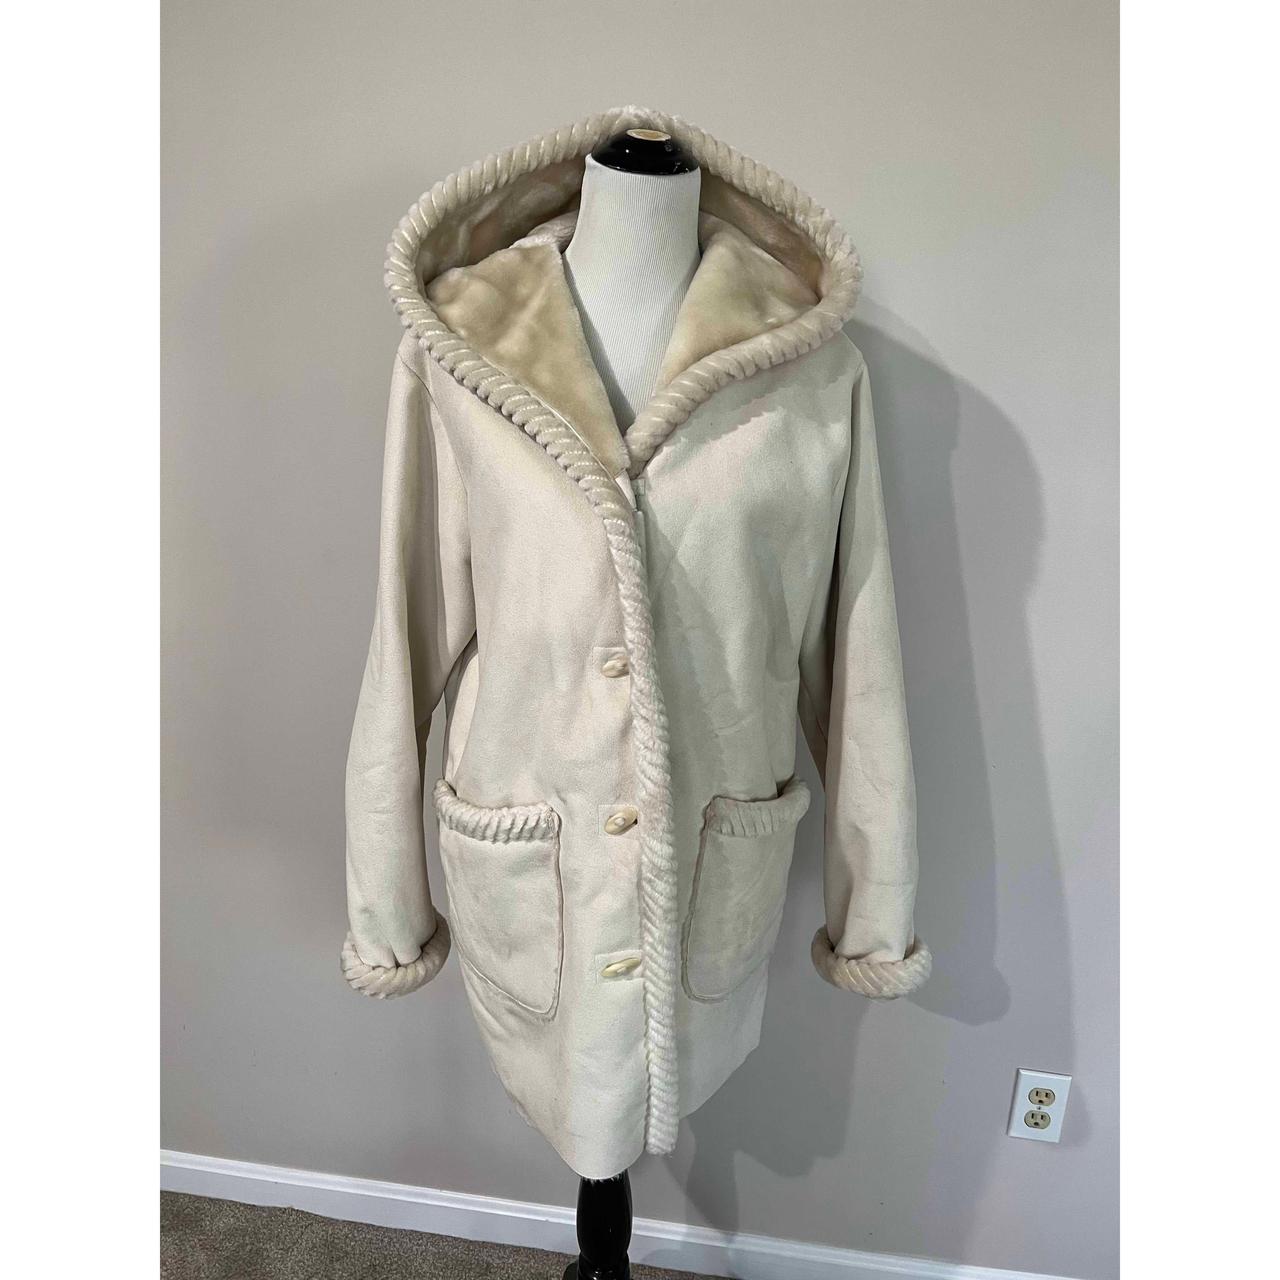 St. John Bay women coat pockets hood size L. Coat... - Depop